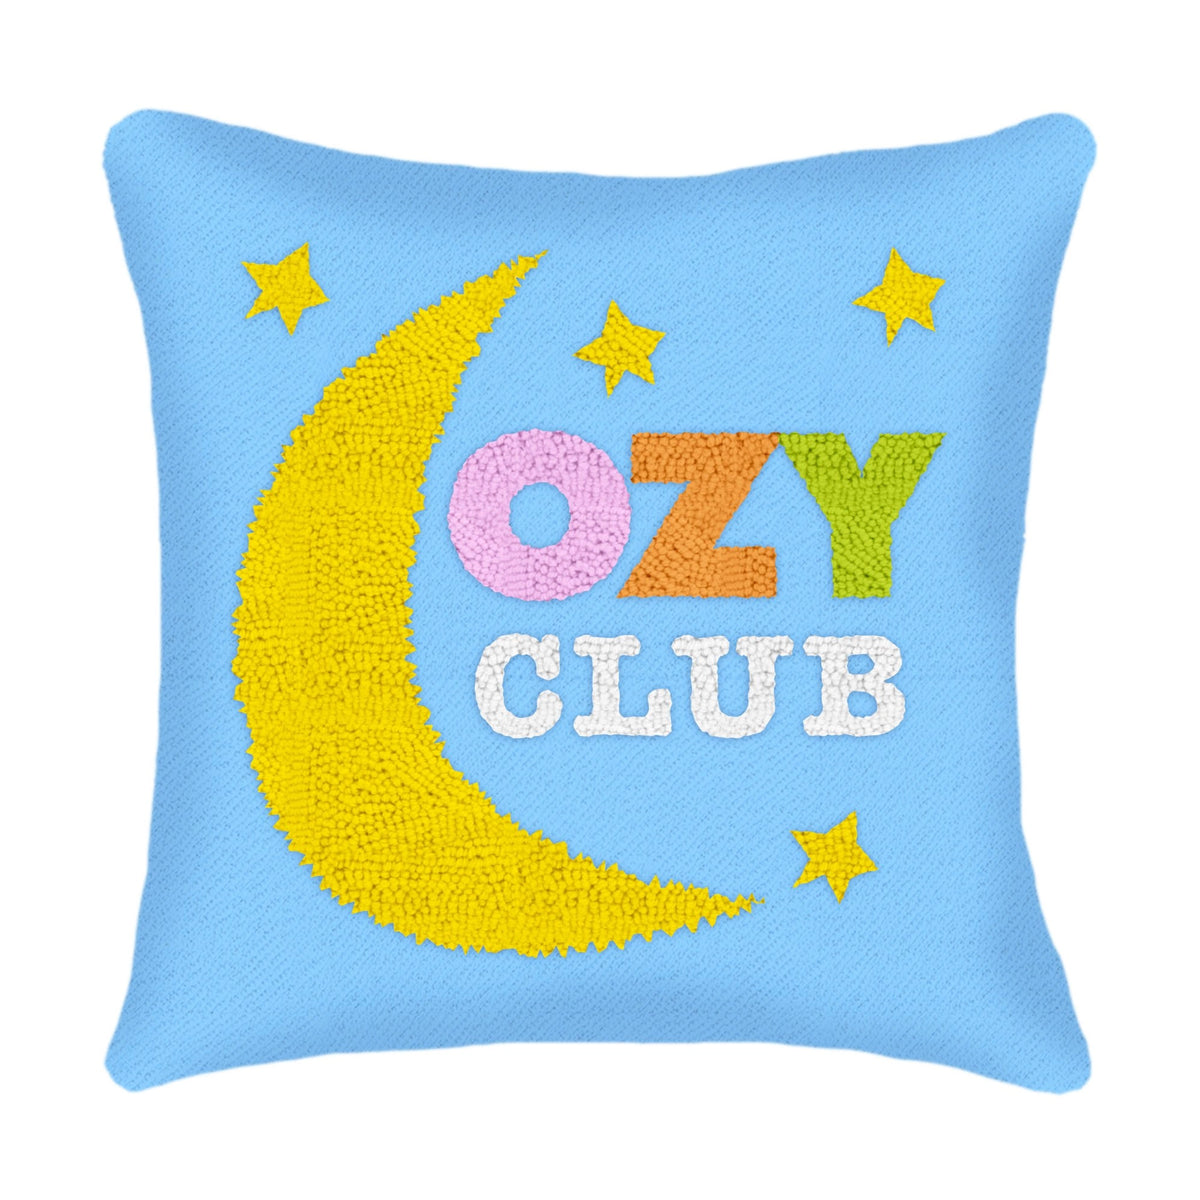 Square Hook Pillow - Cozy Club